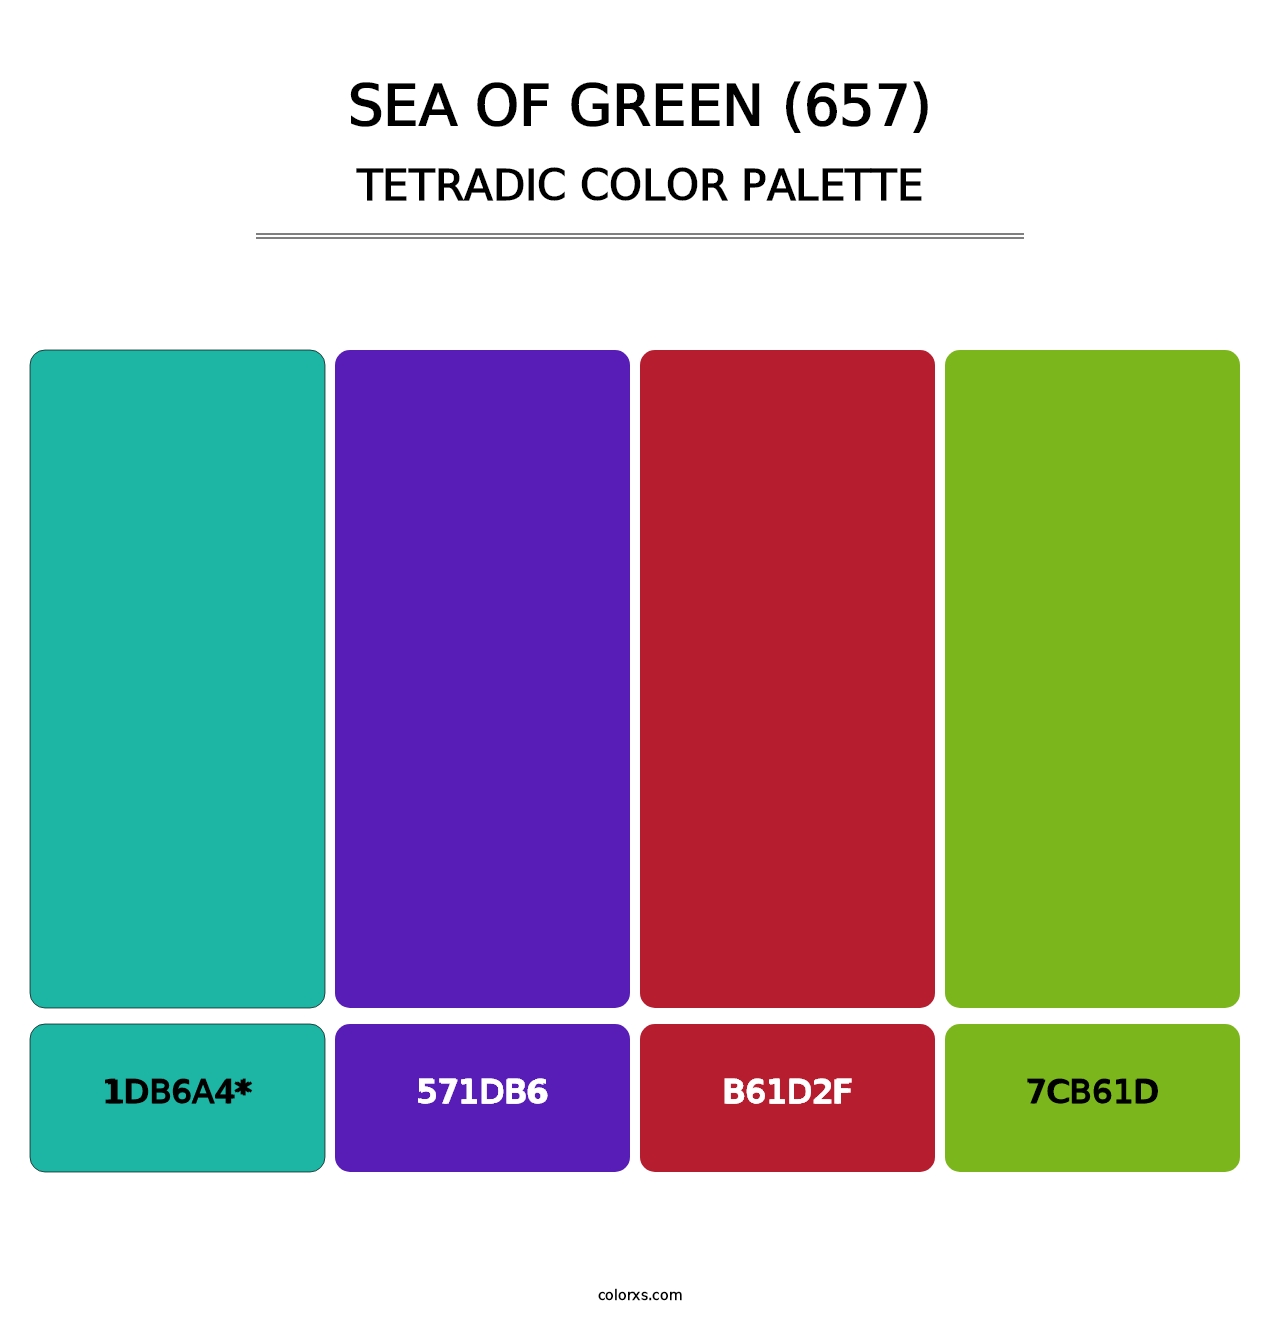 Sea of Green (657) - Tetradic Color Palette